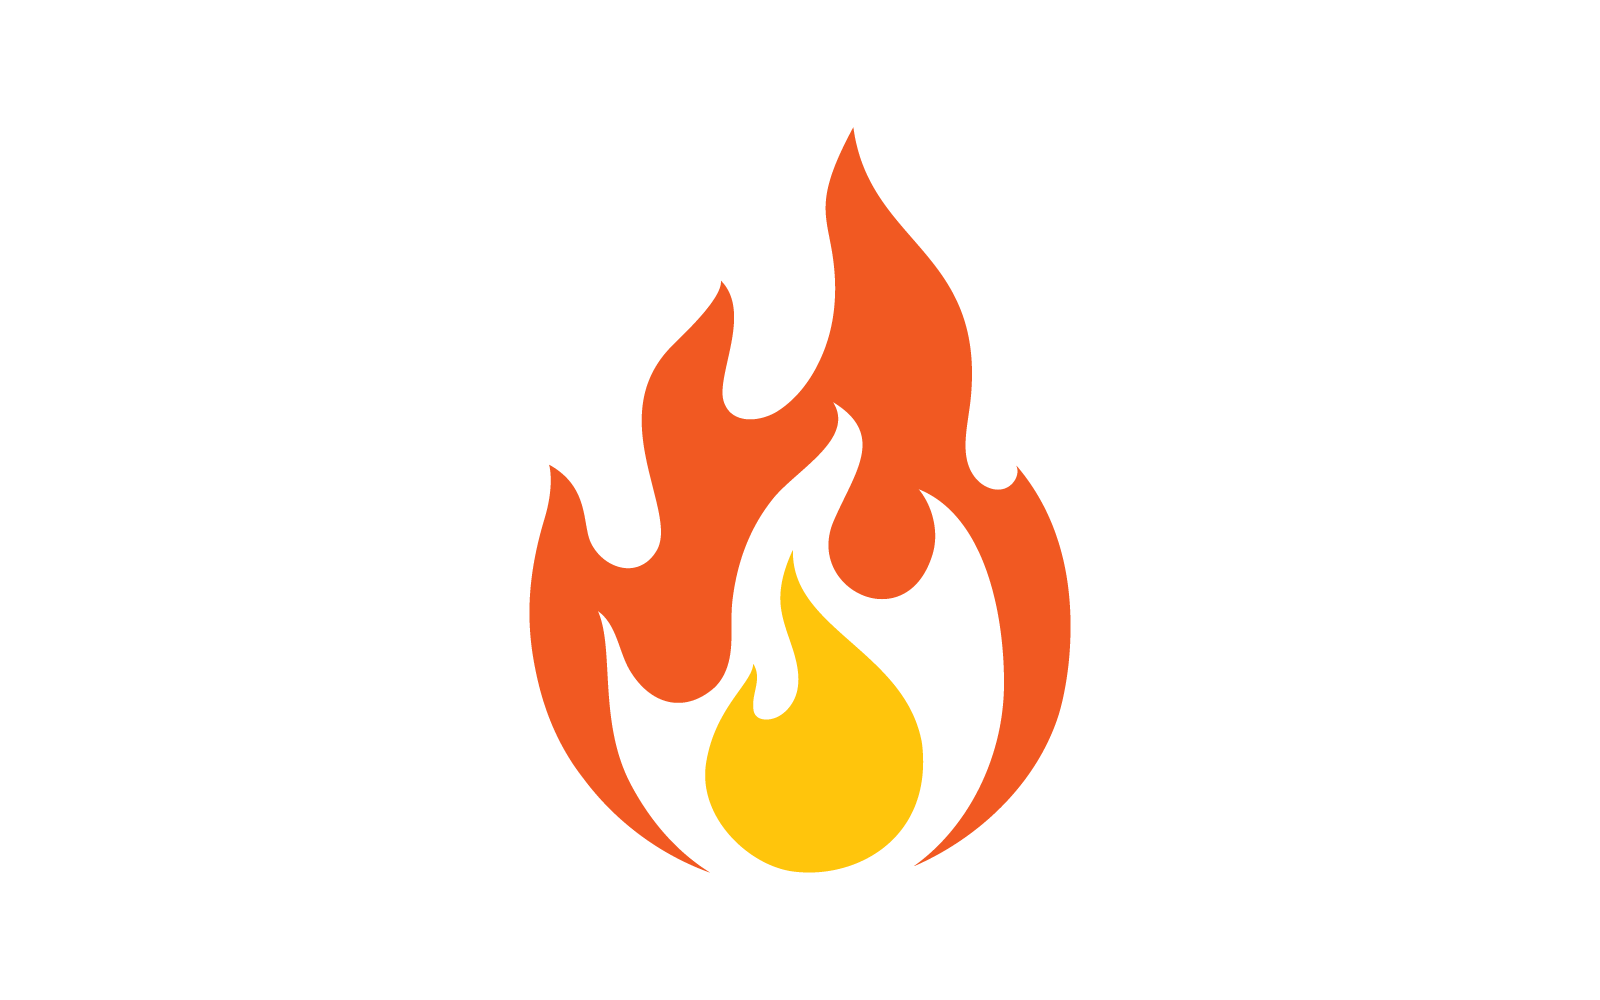 Вектор логотипа пламени огня, шаблон логотипа иллюстрации нефти, газа и энергетики